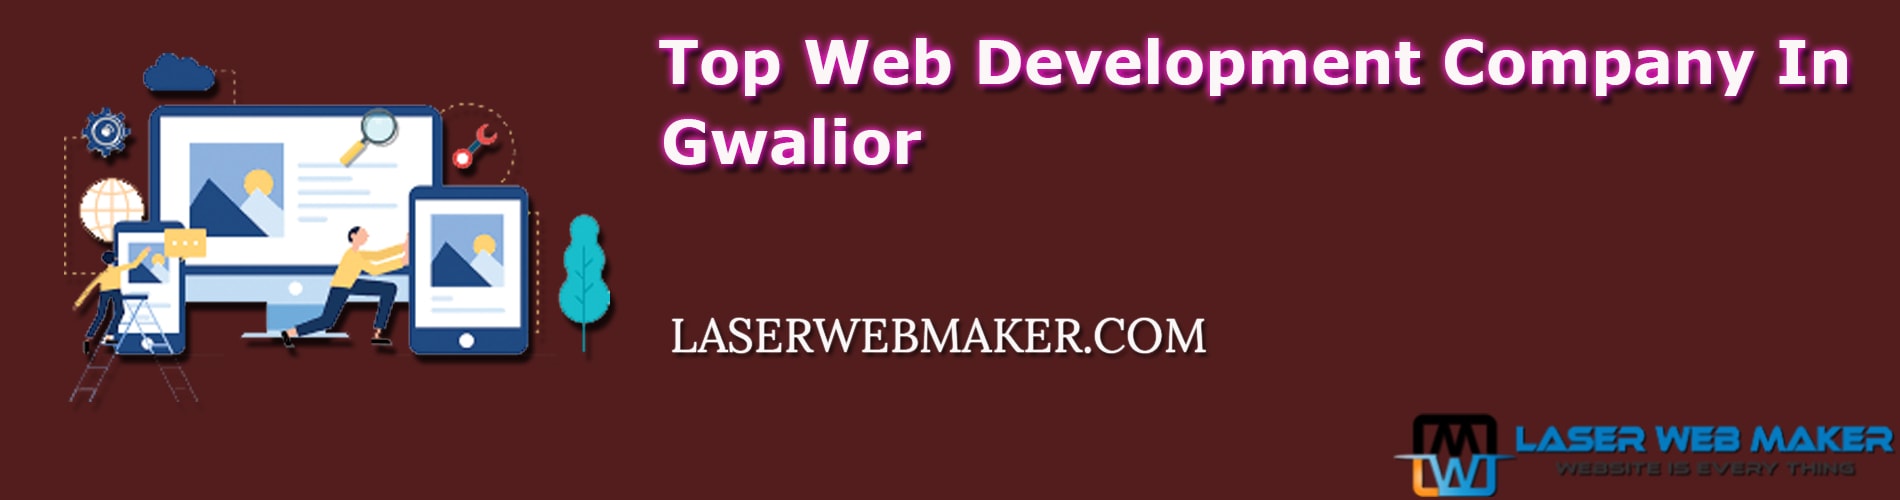 Top Web Development Company In Gwalior